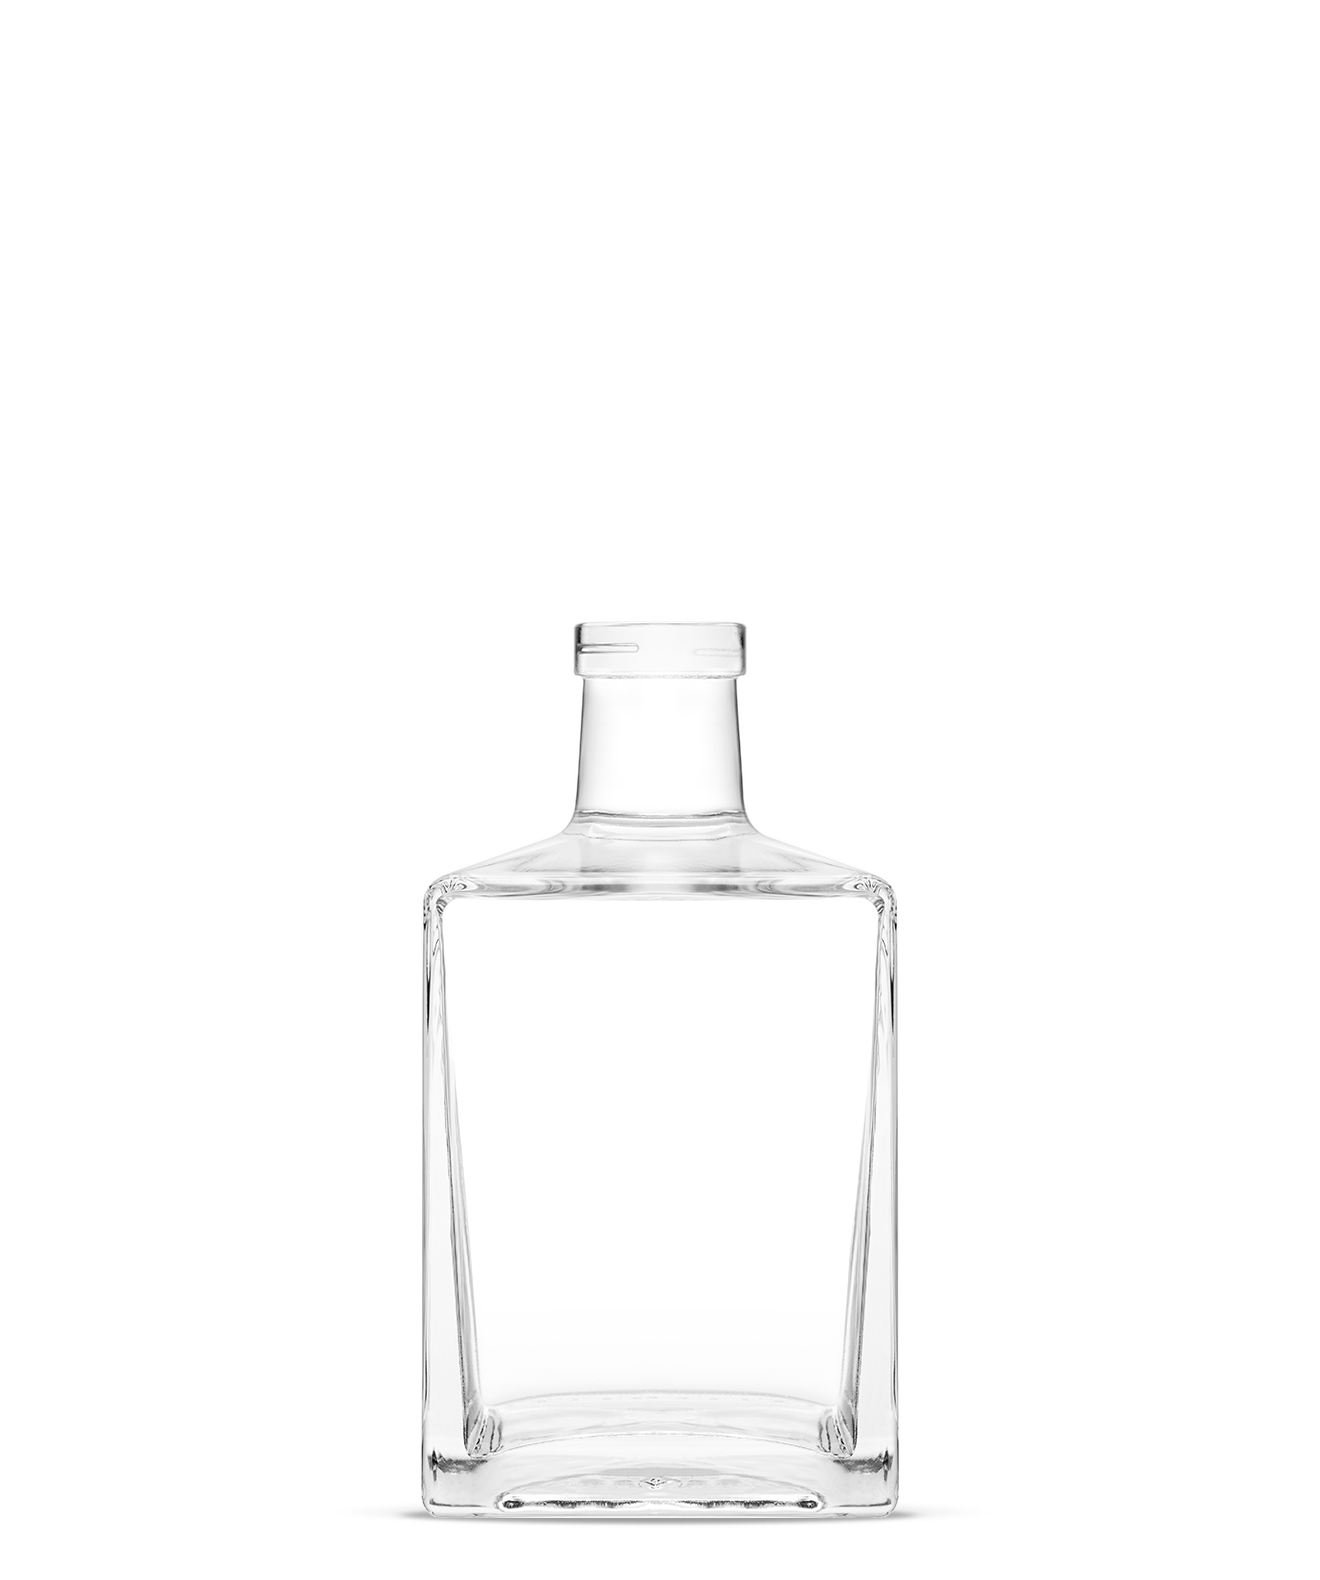 pamela-eco-fragancias-perfumesparaambiente-vetroelite-view